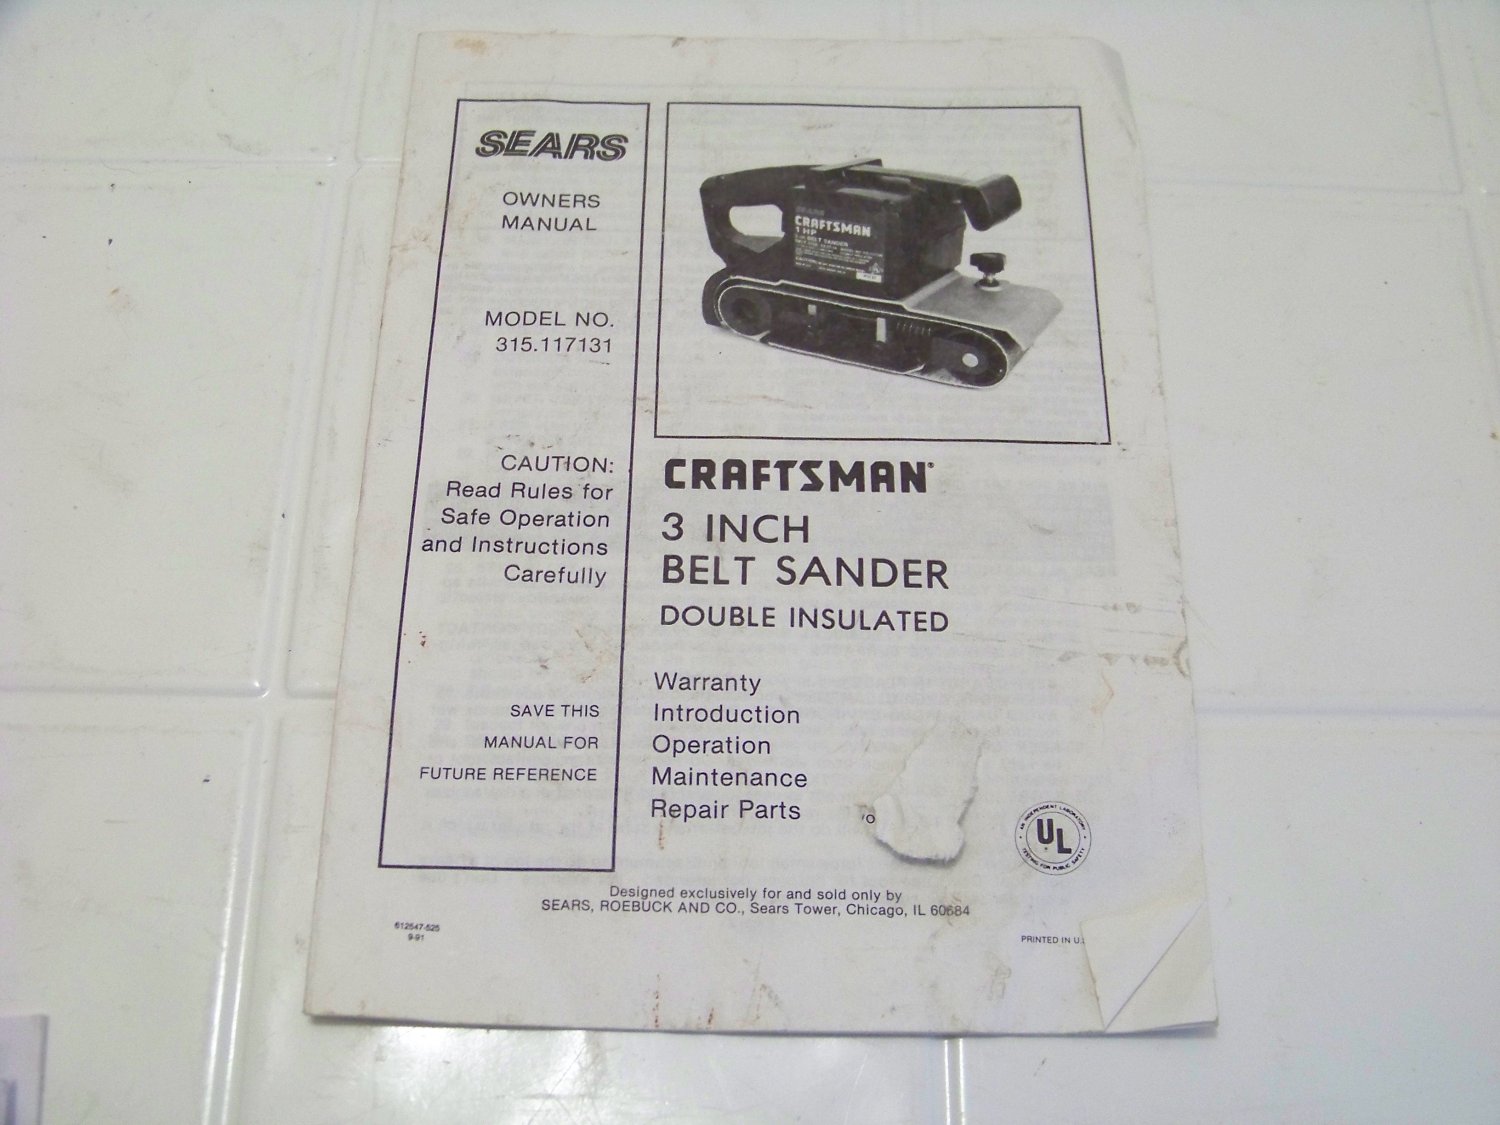 Craftsman operators manual 3 inch belt sander double insulated